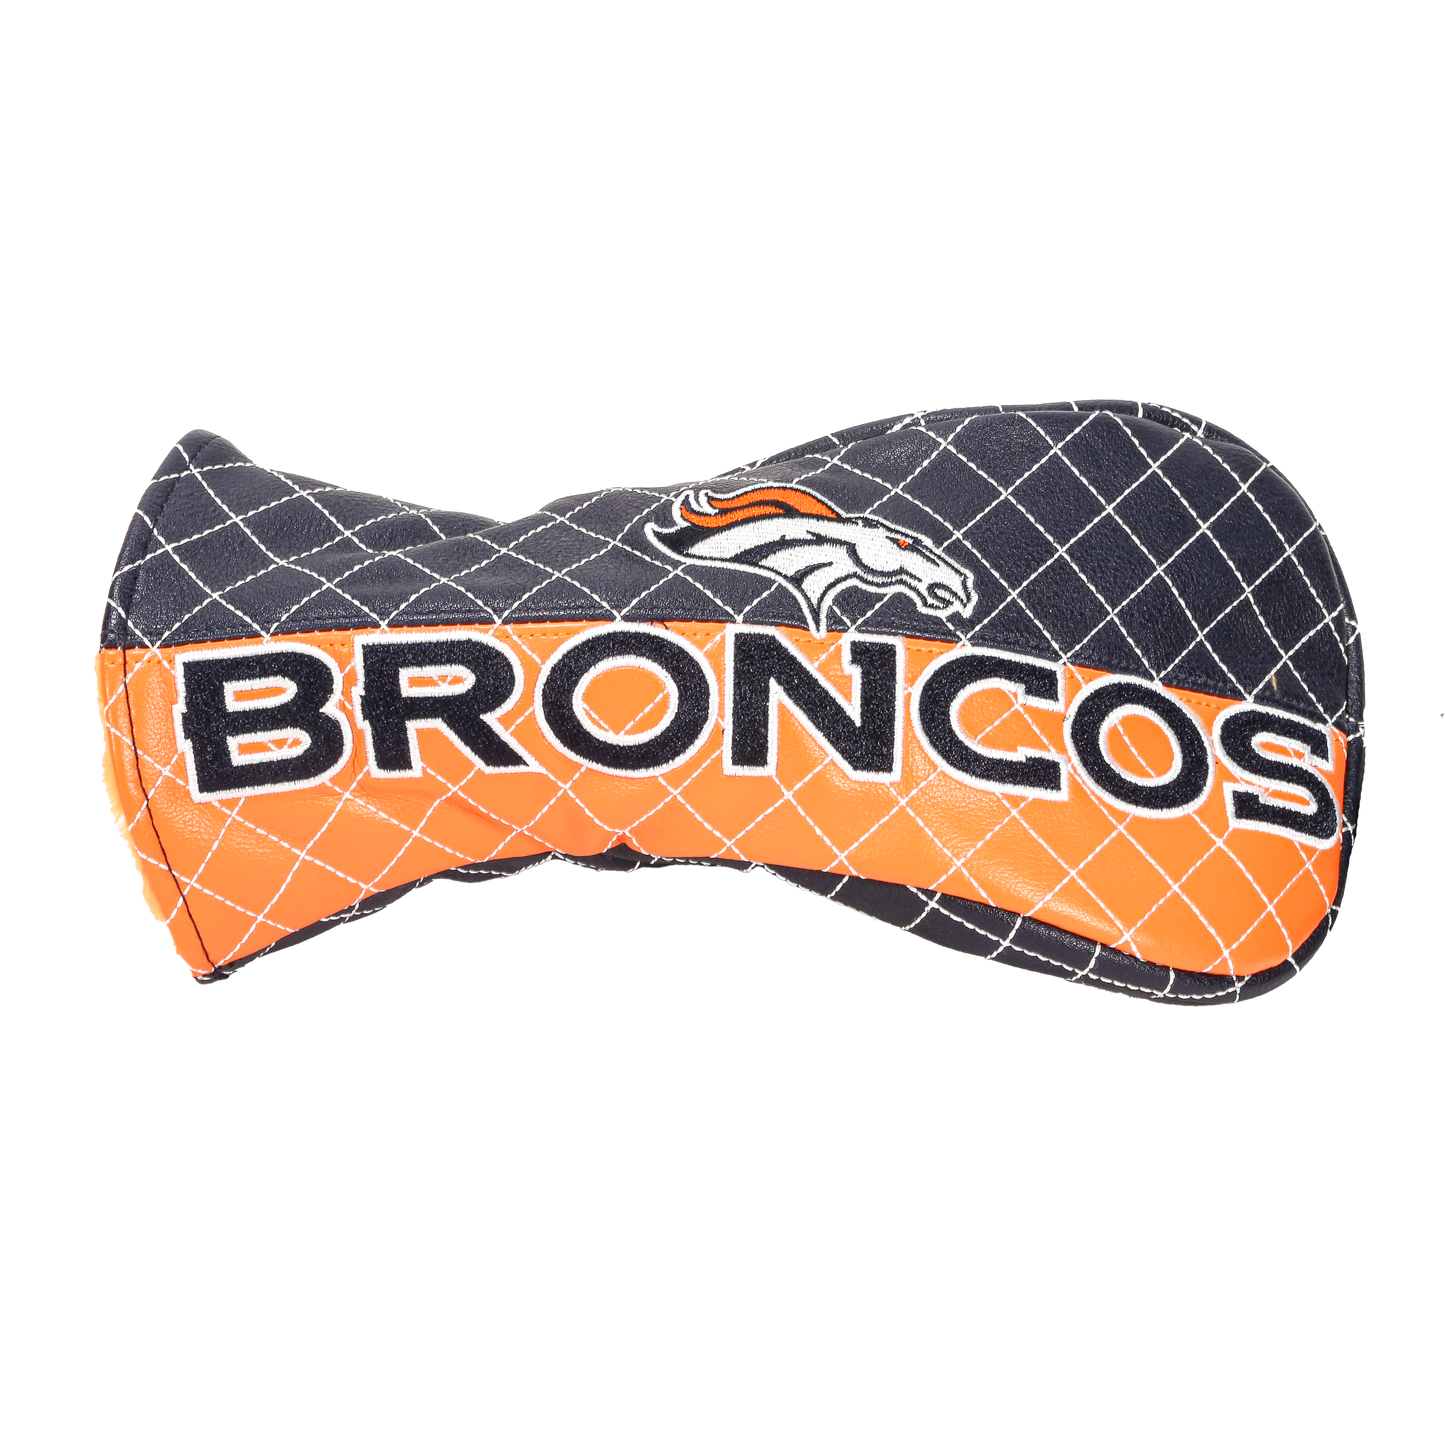 Broncos Fairway Putter Cover